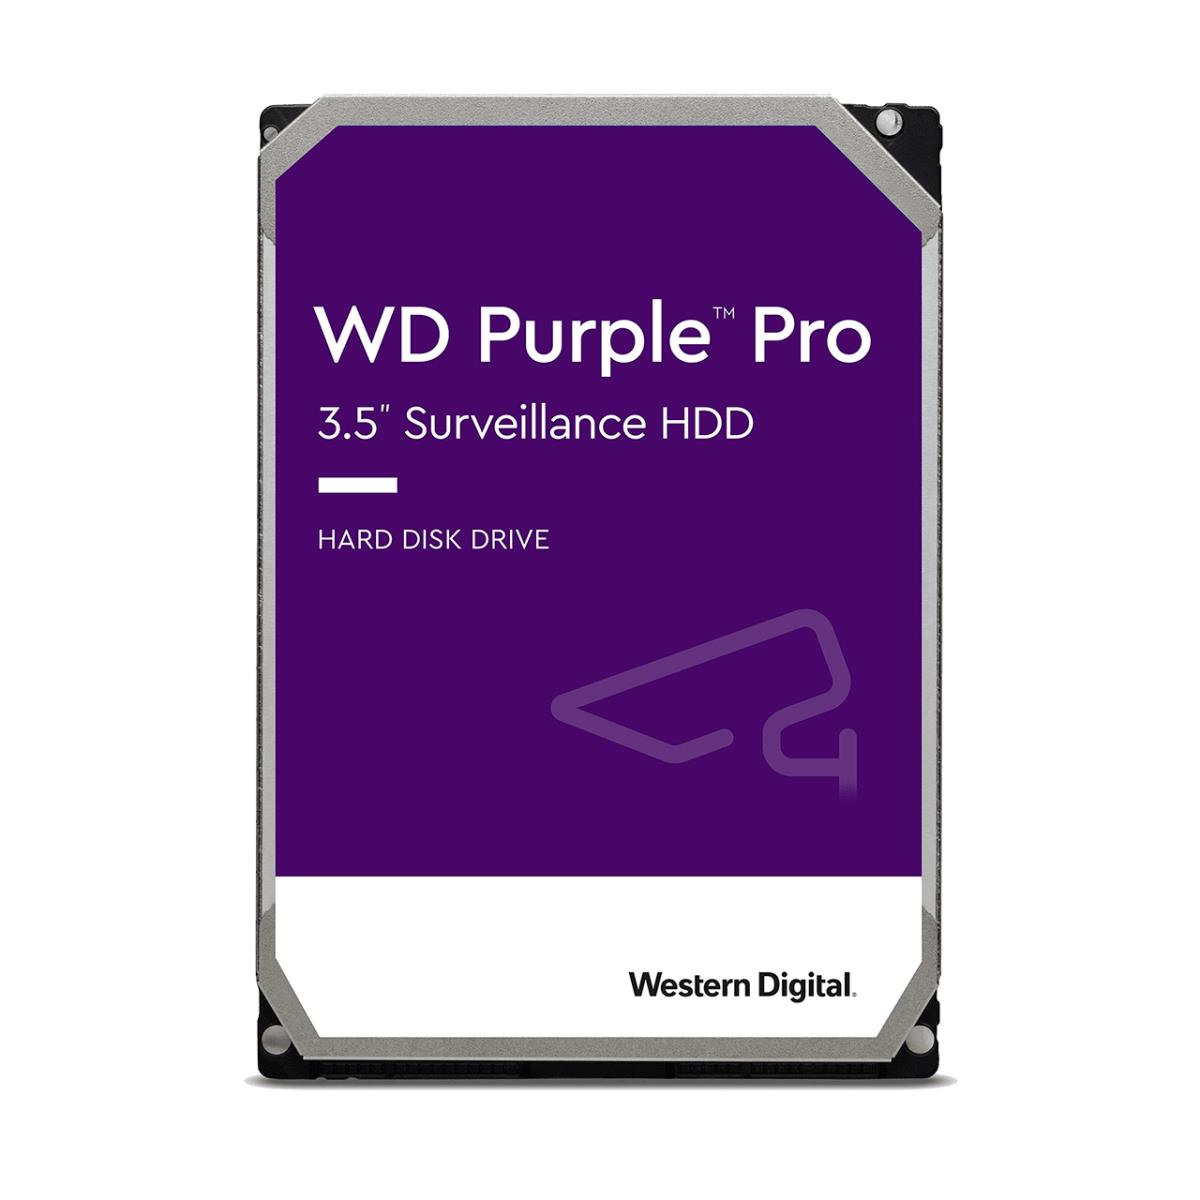 WESTERN DIGITAL Hard Drive Wd Purple Pro WD101PURP 10TB SATA 6Gb/s  3.5in 7200rpm 256MB Cache WD101PURP